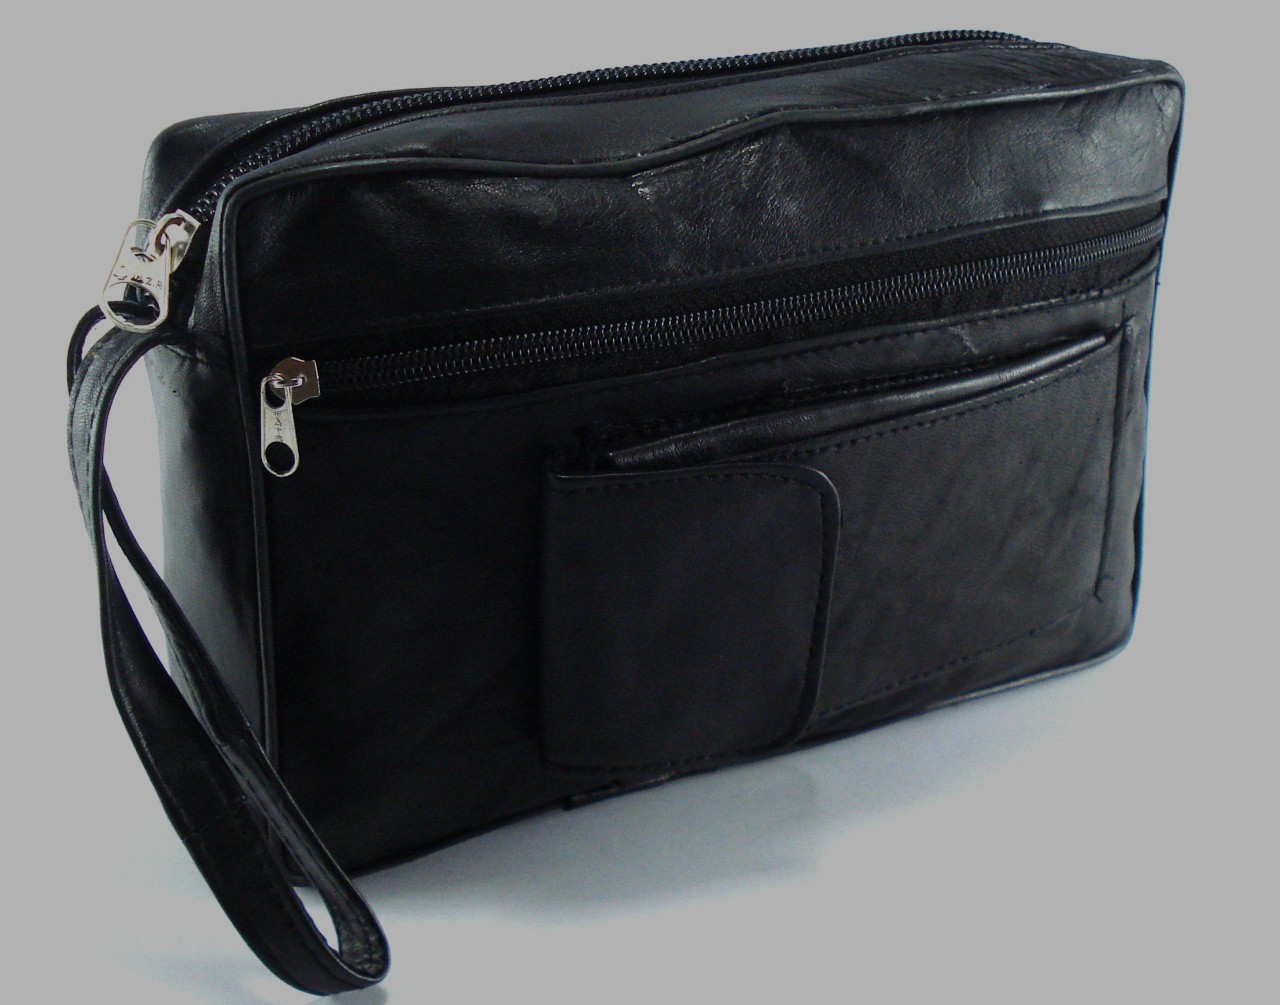 Just Leather Mens Genuine Leather Wrist Bag Wash Toiletry Bag Wrist Strap AW1 | eBay